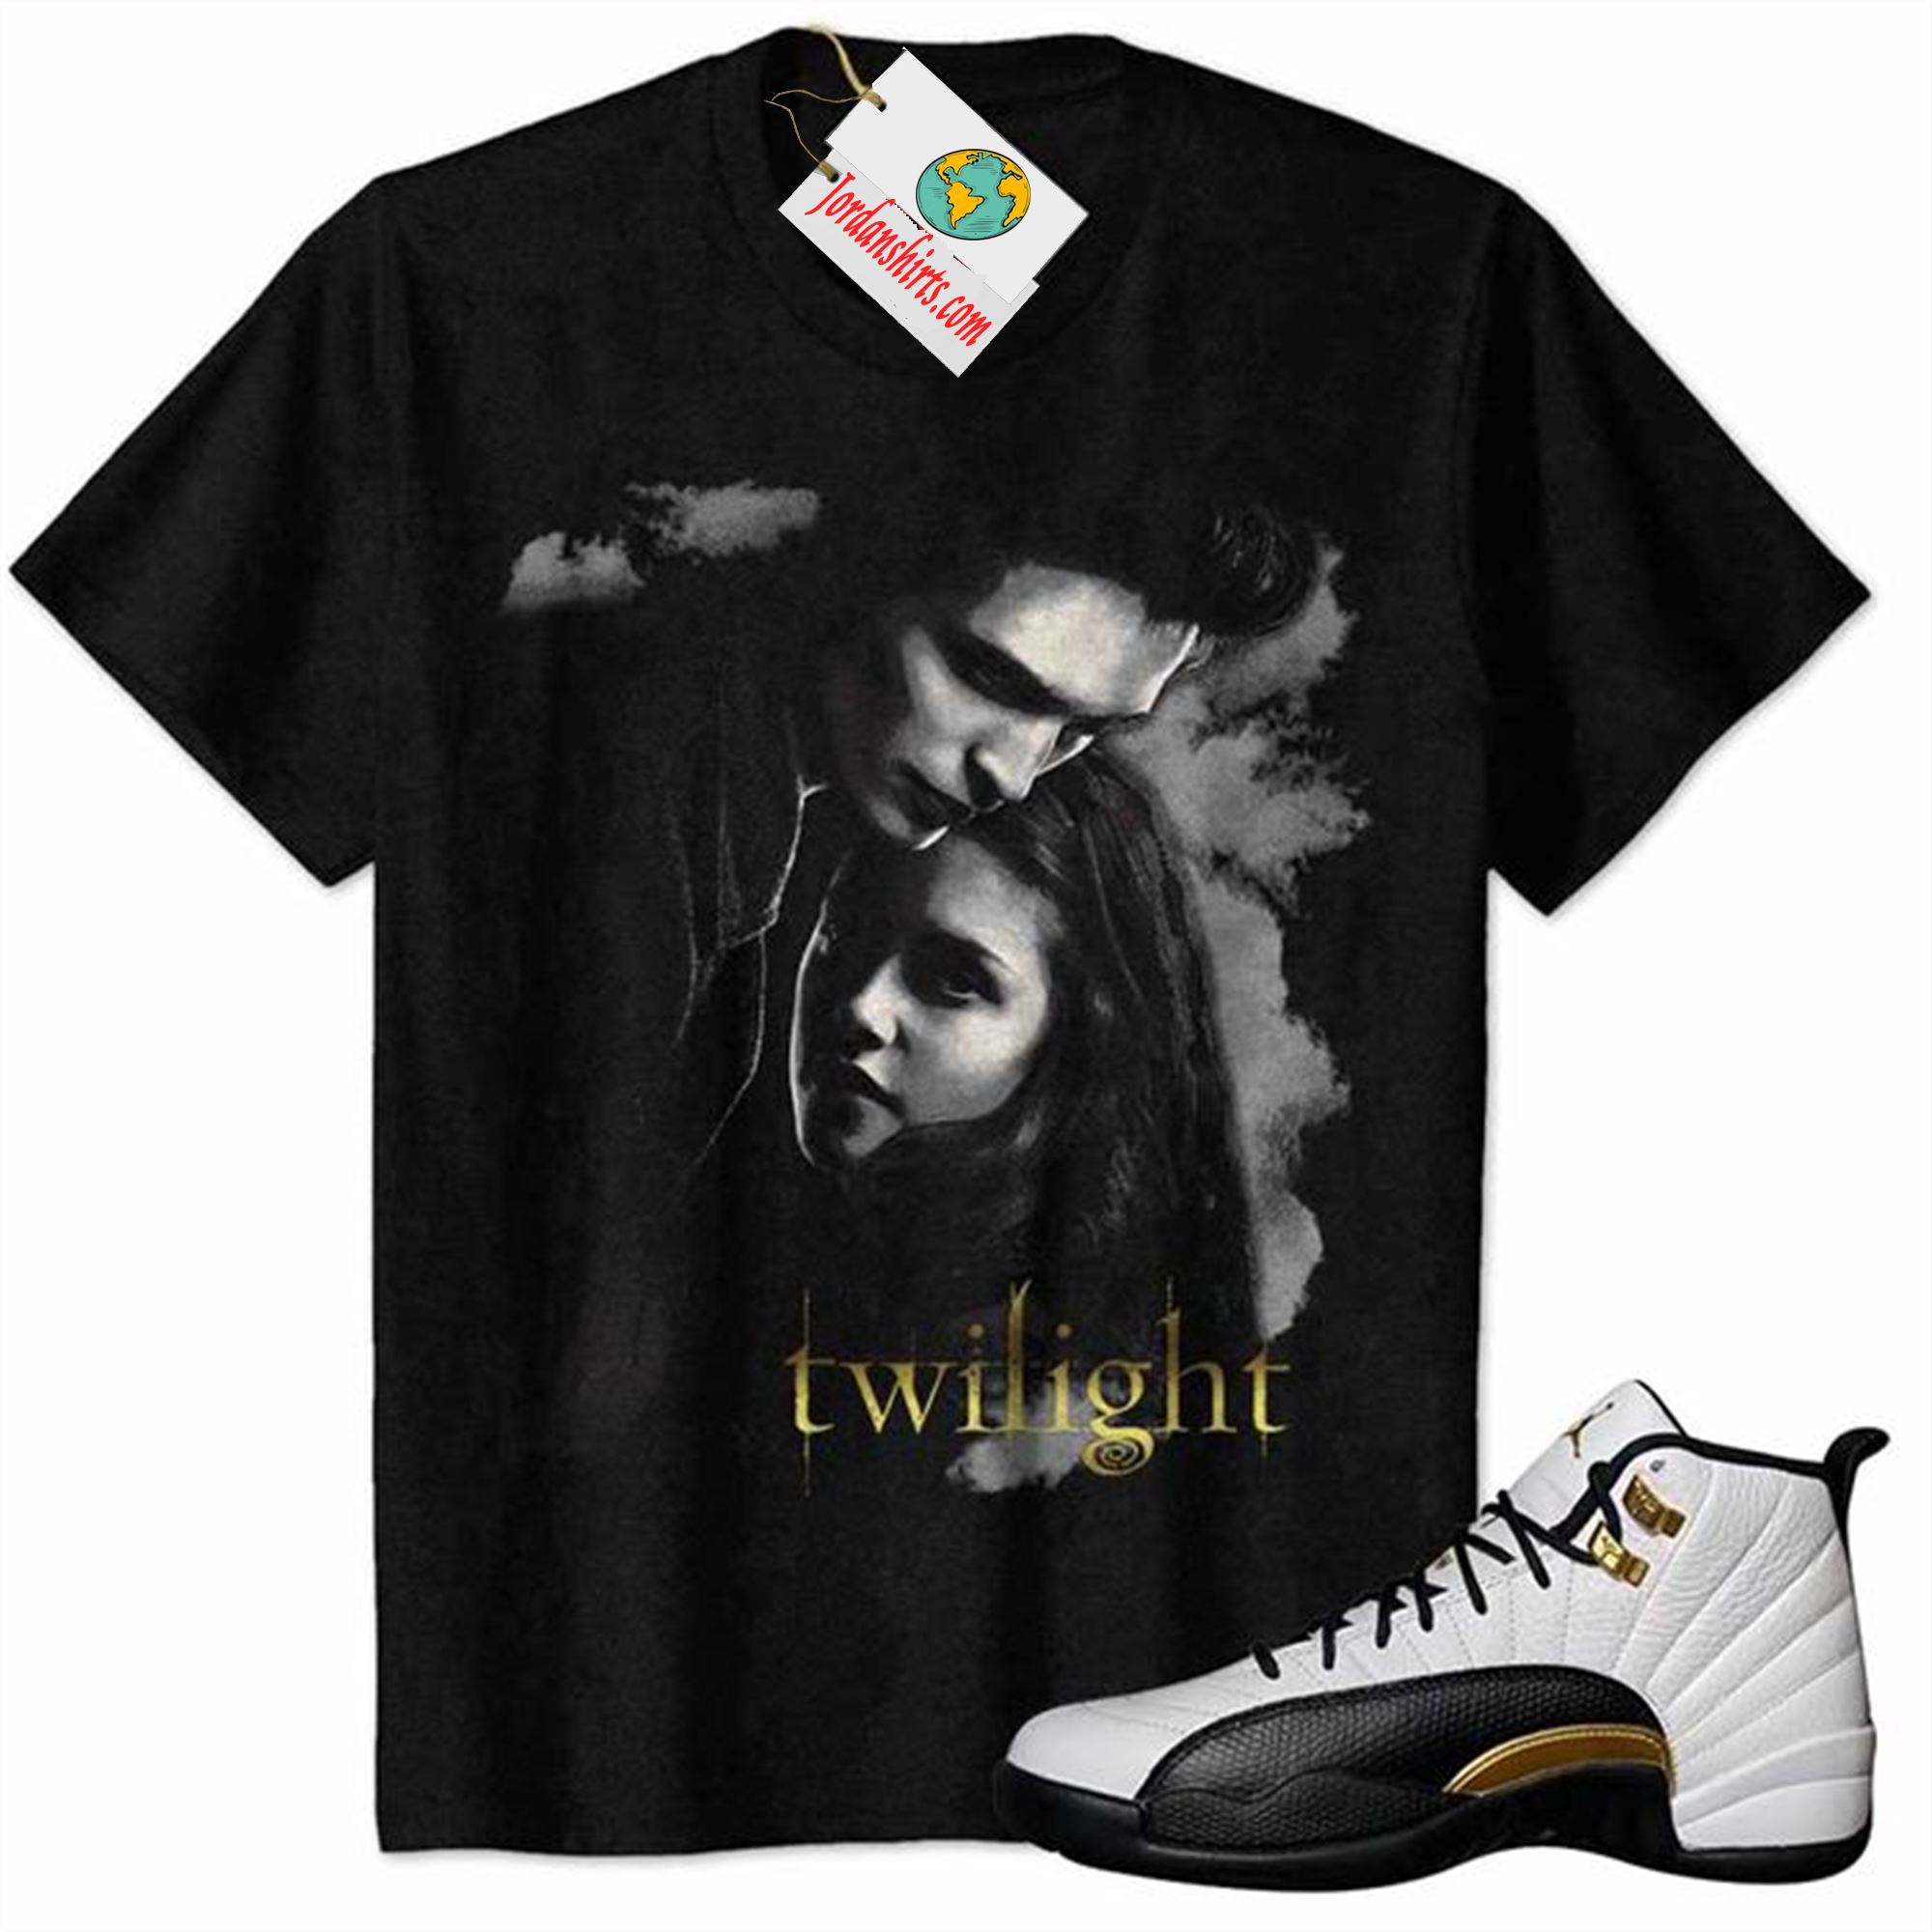 Jordan 12 Shirt, Twilight Saga Edward Cullen And Bella Swan Vintage Black Air Jordan 12 Royalty 12s Size Up To 5xl